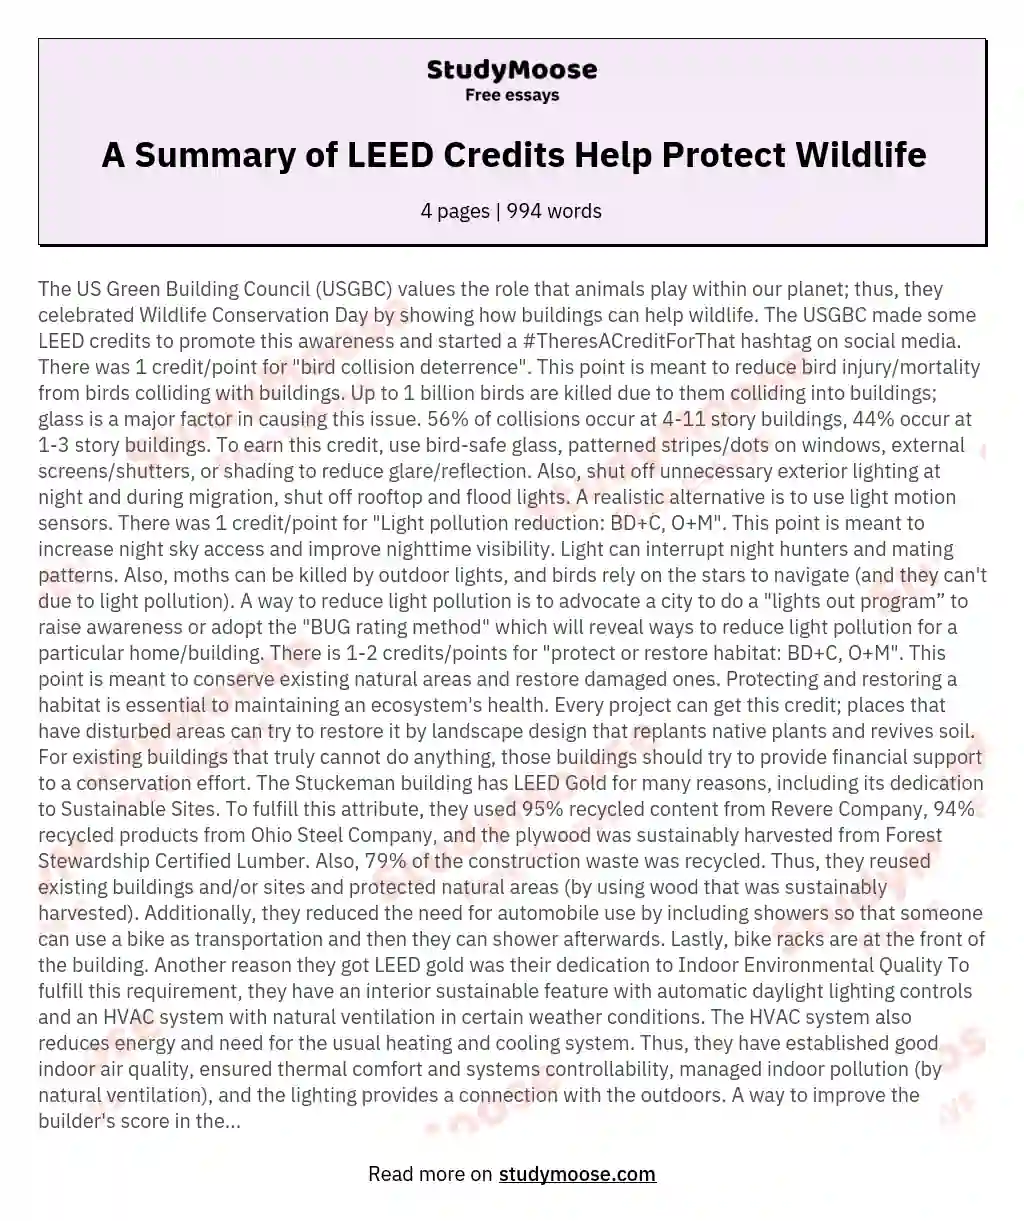 A Summary of LEED Credits Help Protect Wildlife essay